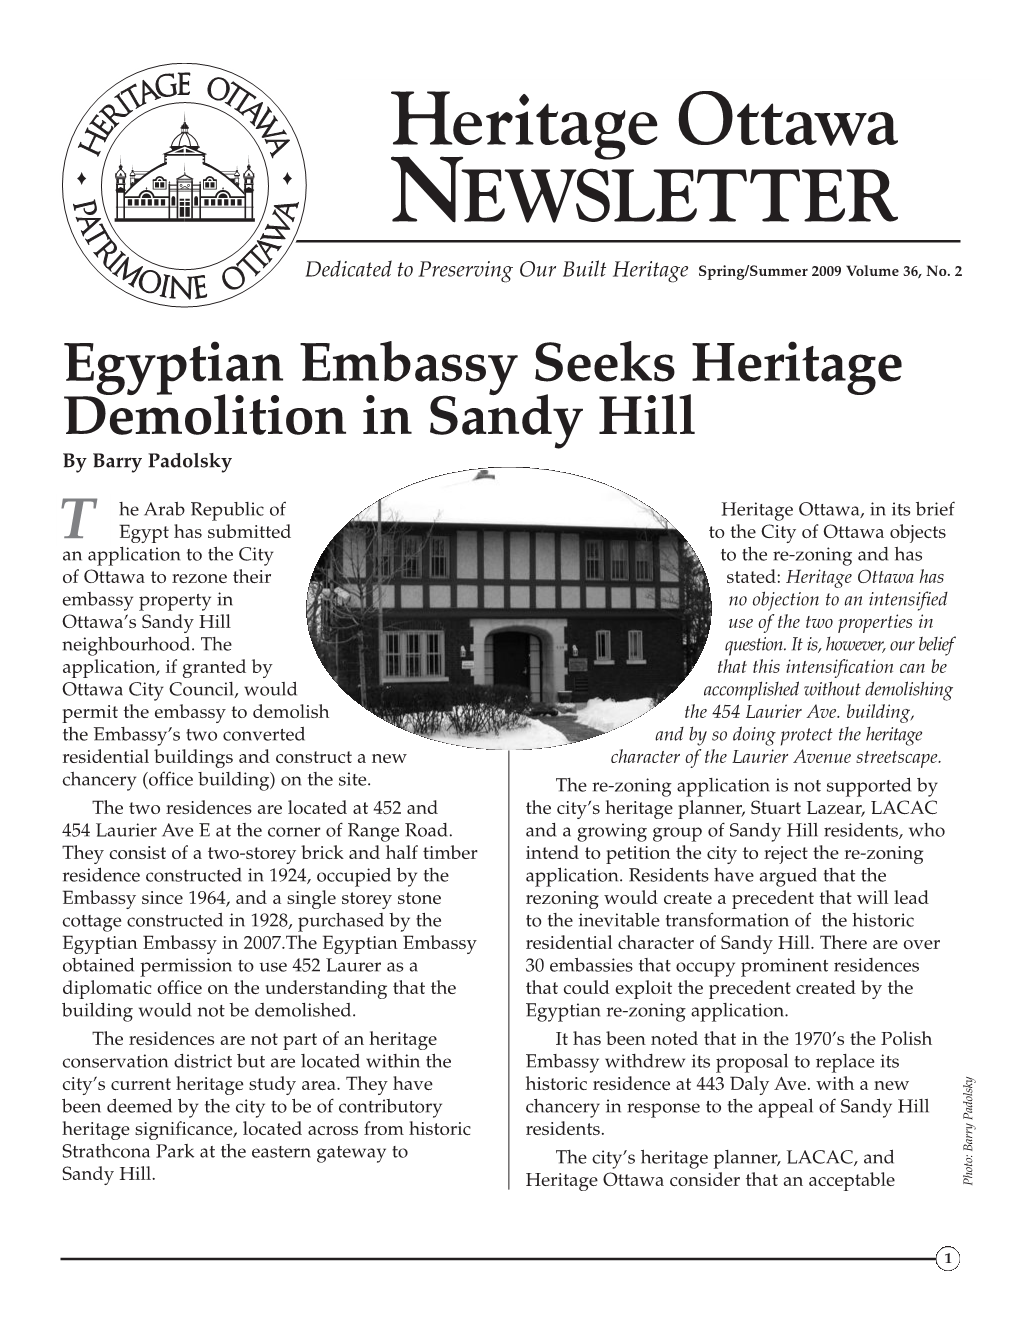 Egyptian Embassy Seeks Heritage Demolition in Sandy Hill by Barry Padolsky